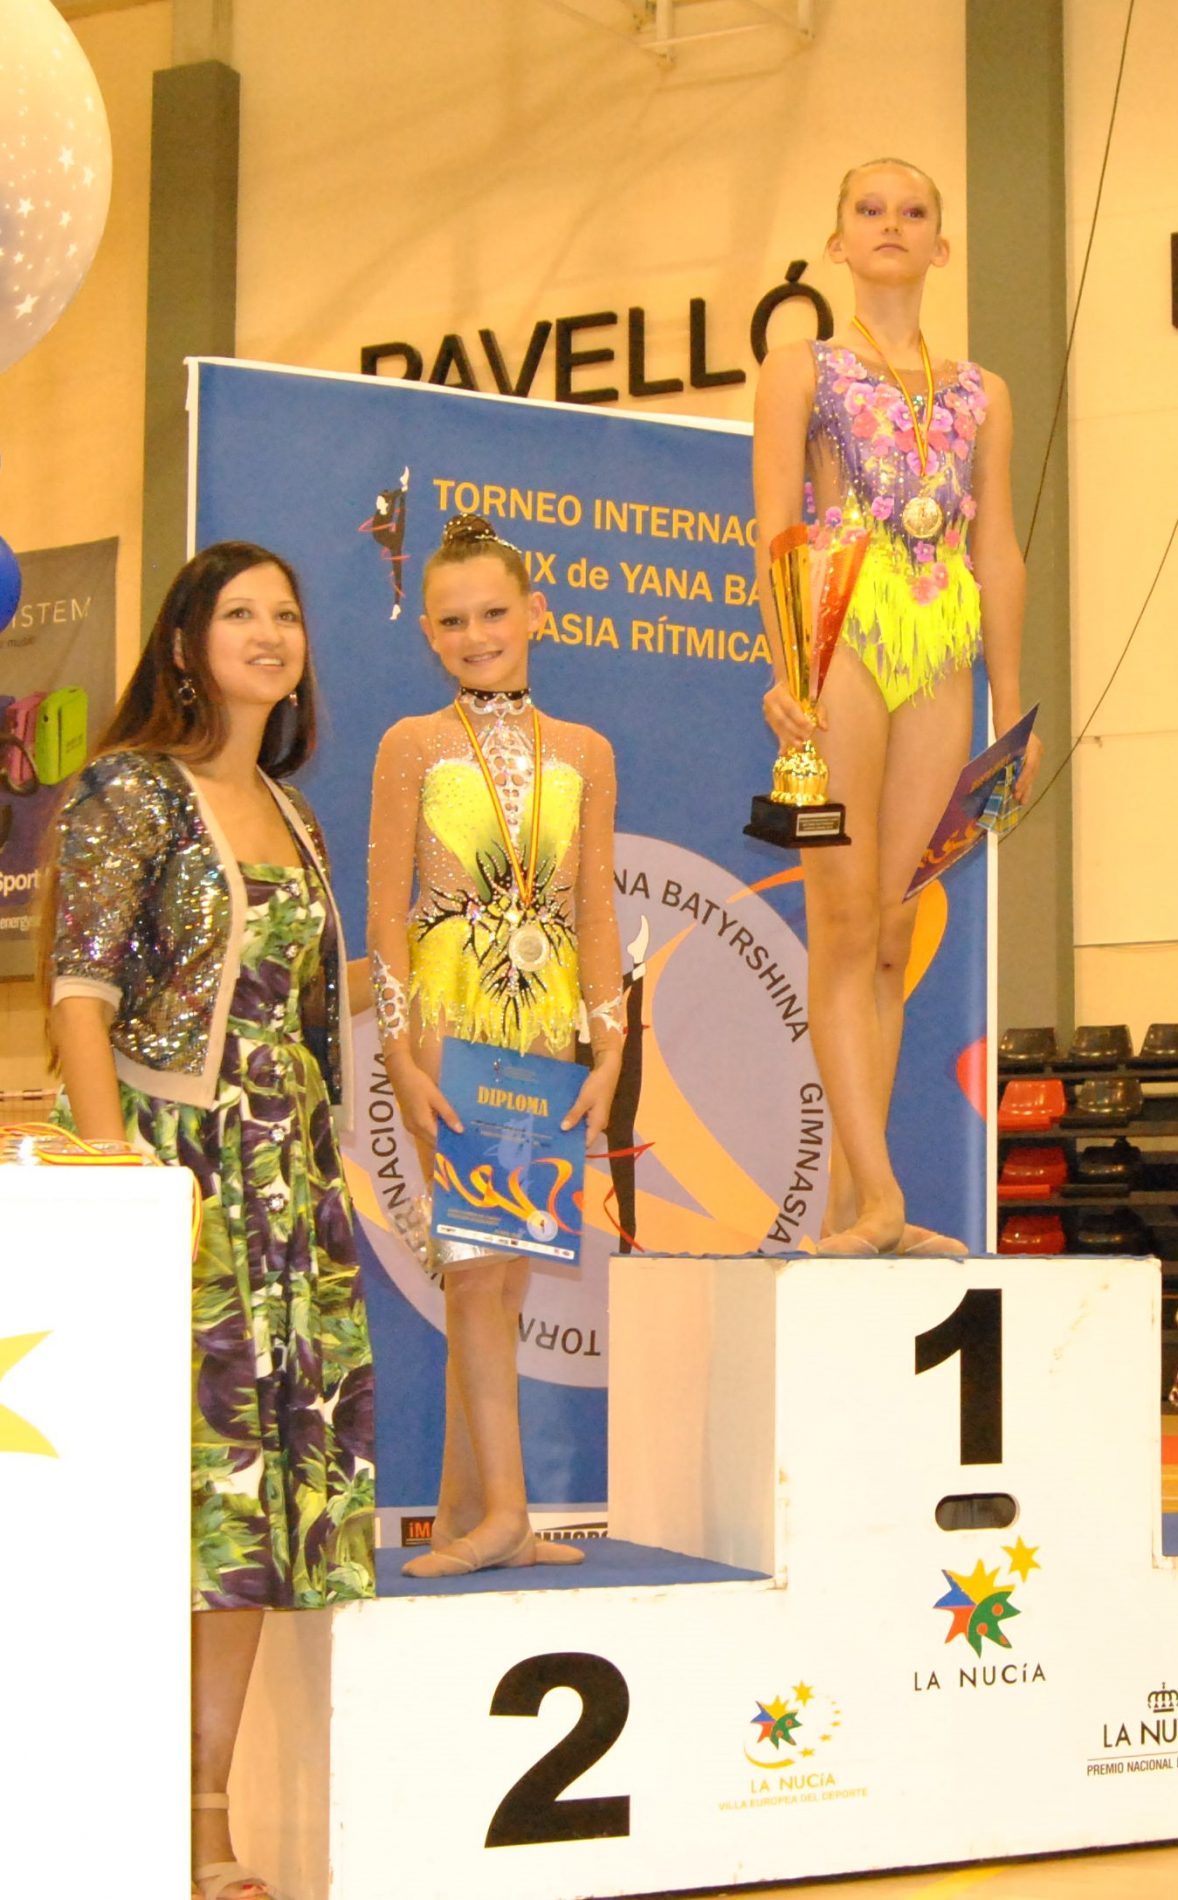 Torneo Internacional Prix Yana Batyrshina Jennifer Colino